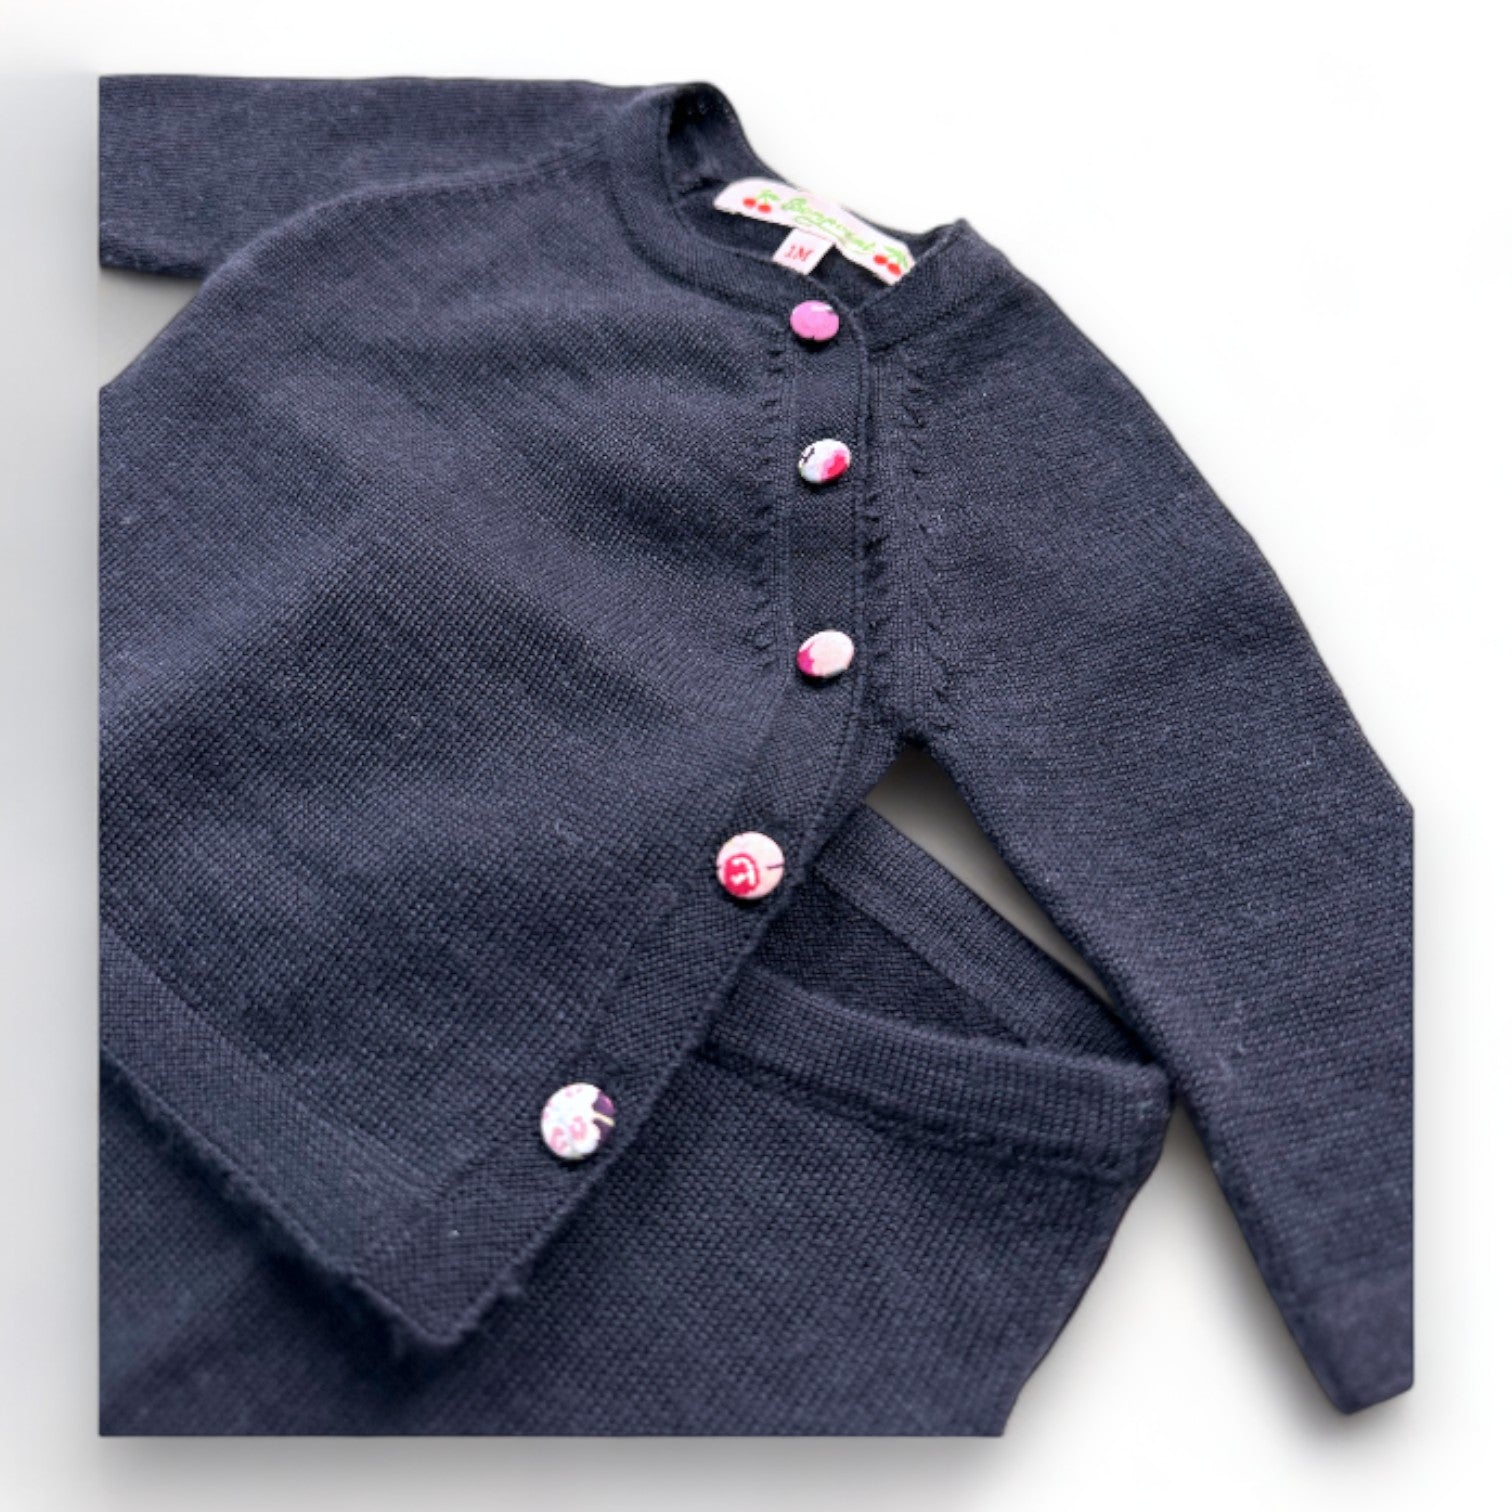 Bonpoint - Ensemble pull et pantalon en laine bleu marine - 1 mois